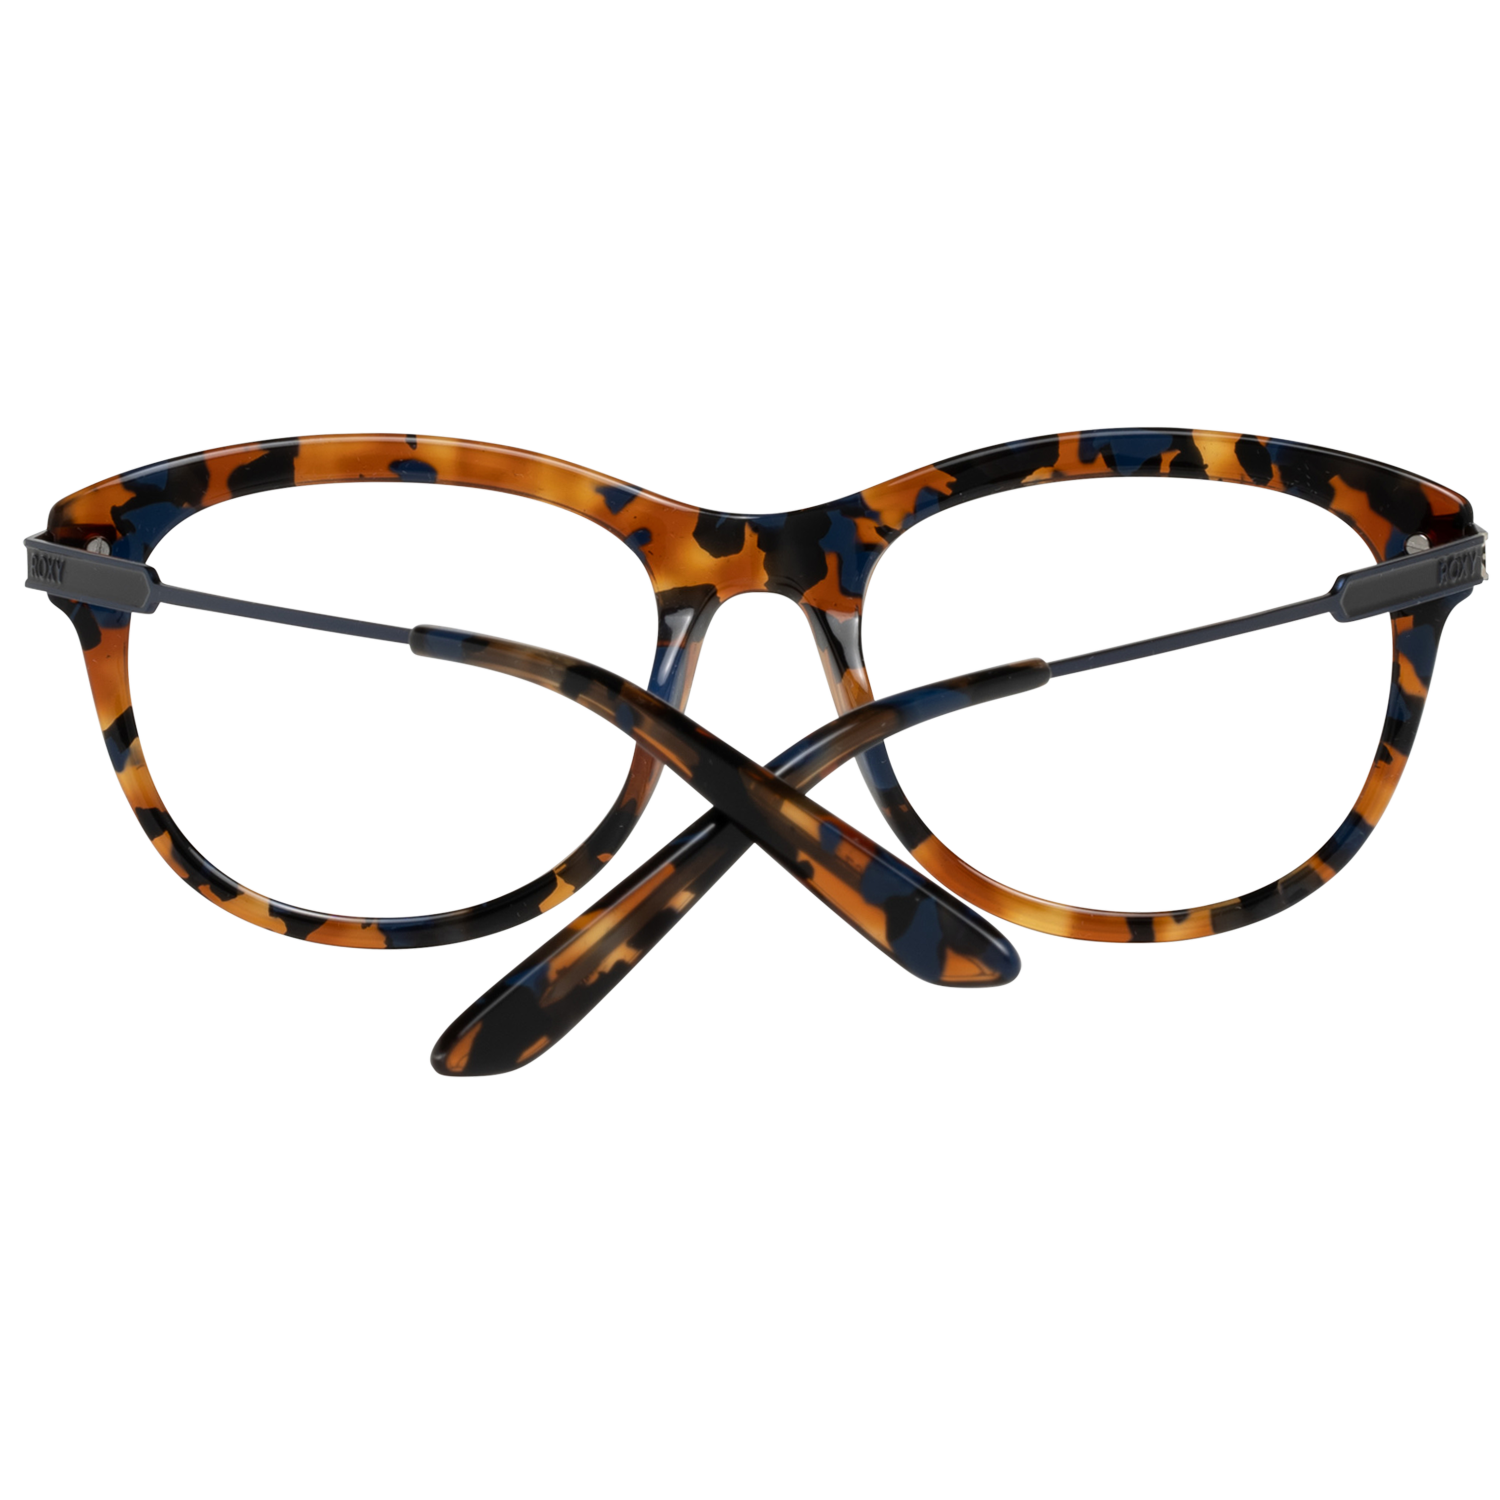 Roxy Frames Roxy Glasses Optical Frame ERJEG03048 ATOR 51 Eyeglasses Eyewear UK USA Australia 